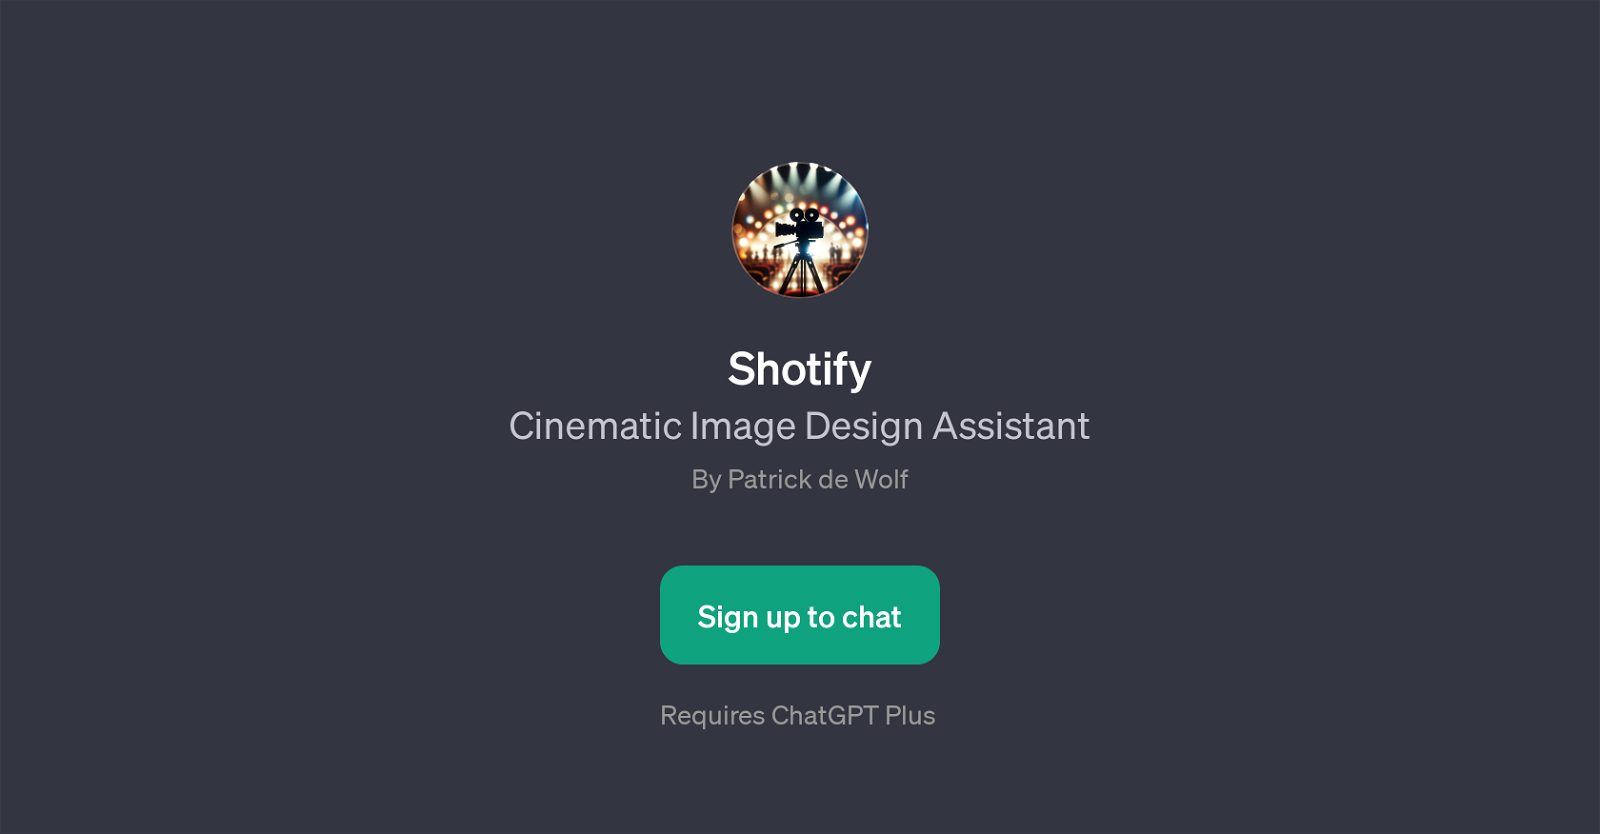 Shotify website